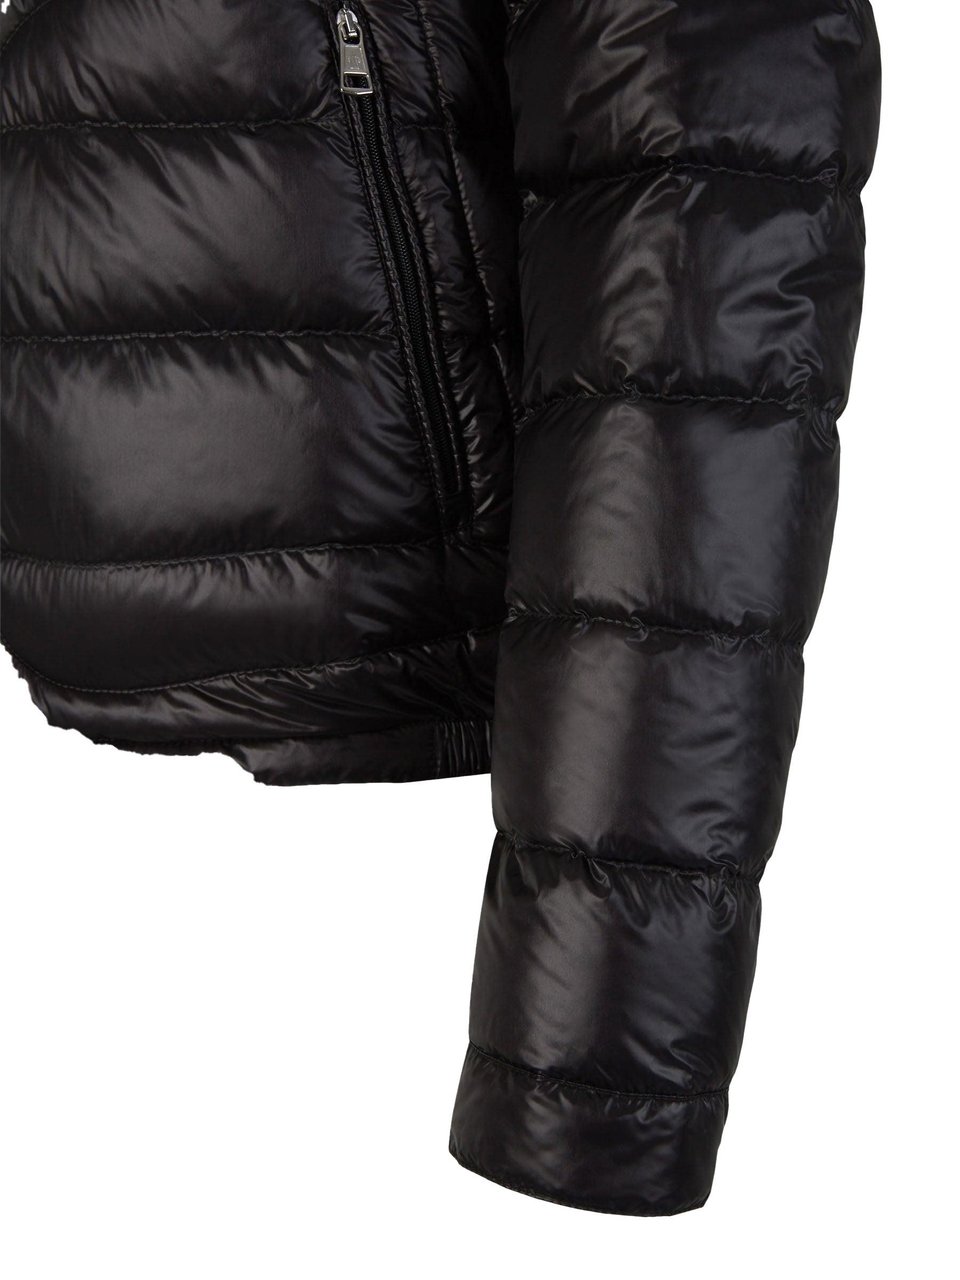 Moncler Acorus Giubbotto Padded Jacket Zwart